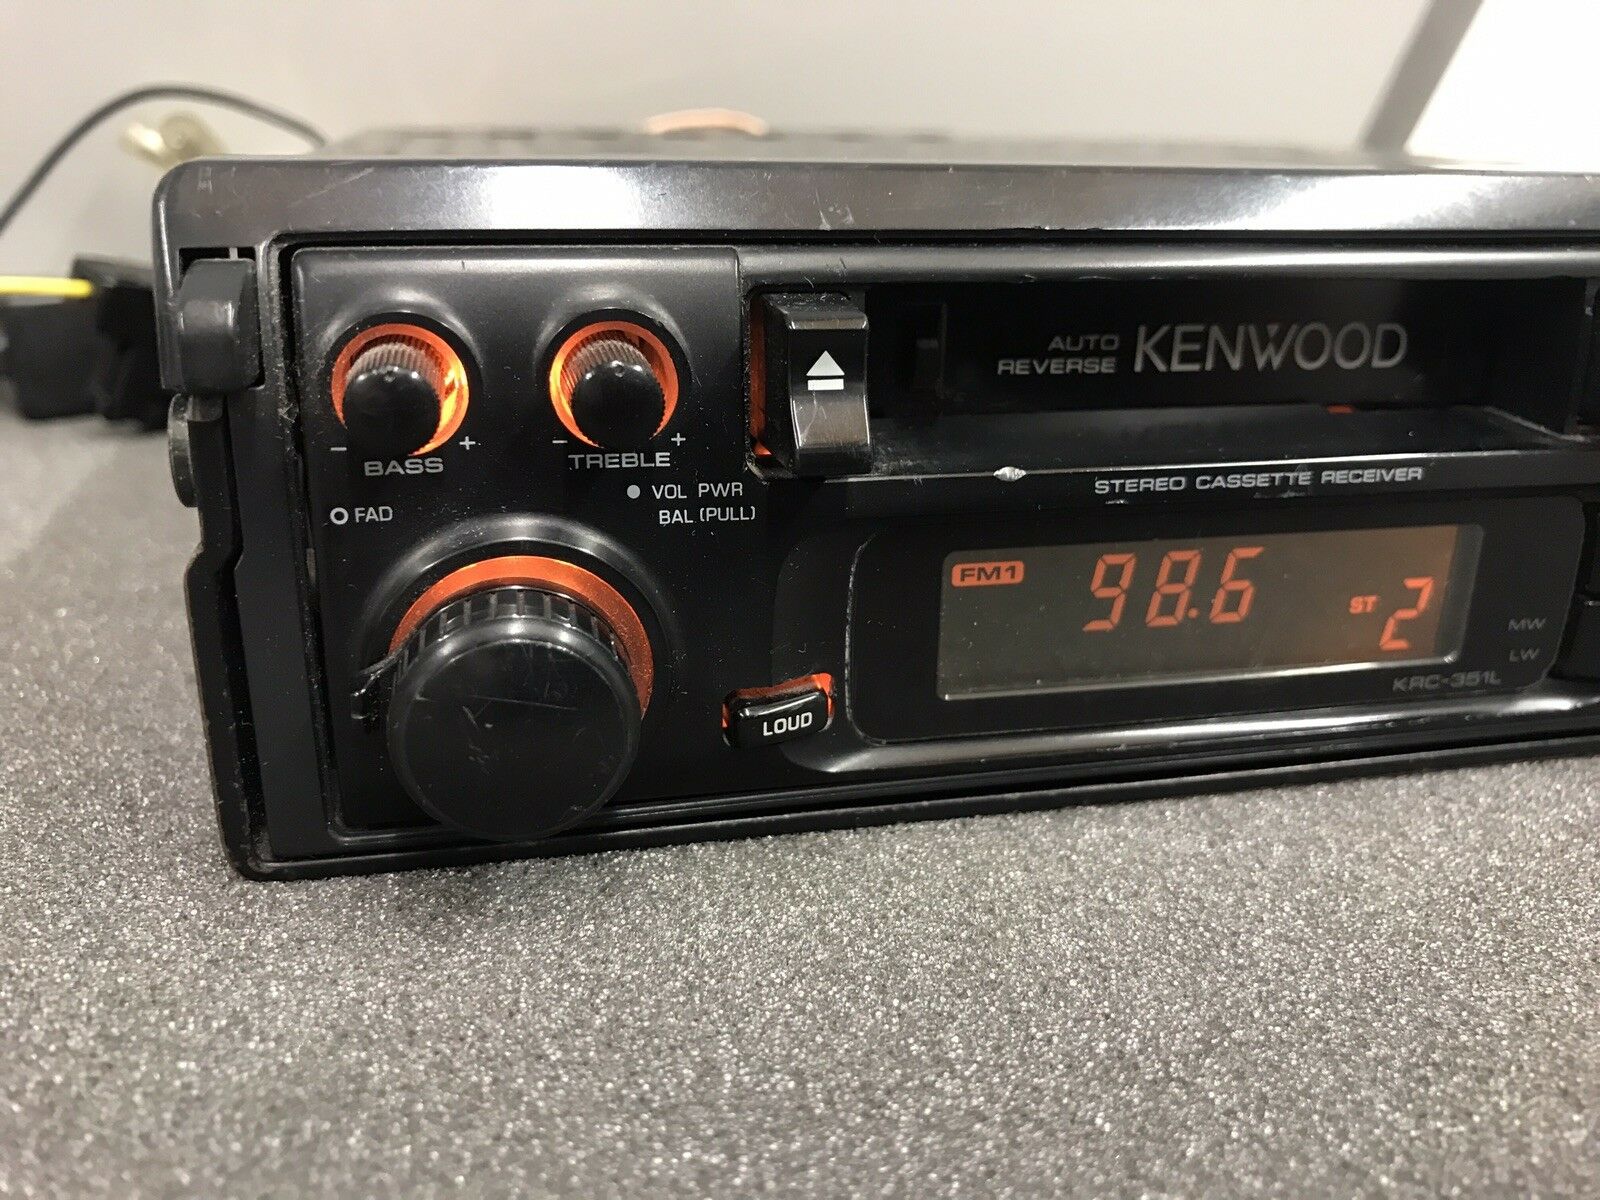 Kenwood 1990s Old Classic Vintage Retro Radio Cassette Player Model Krc-351L